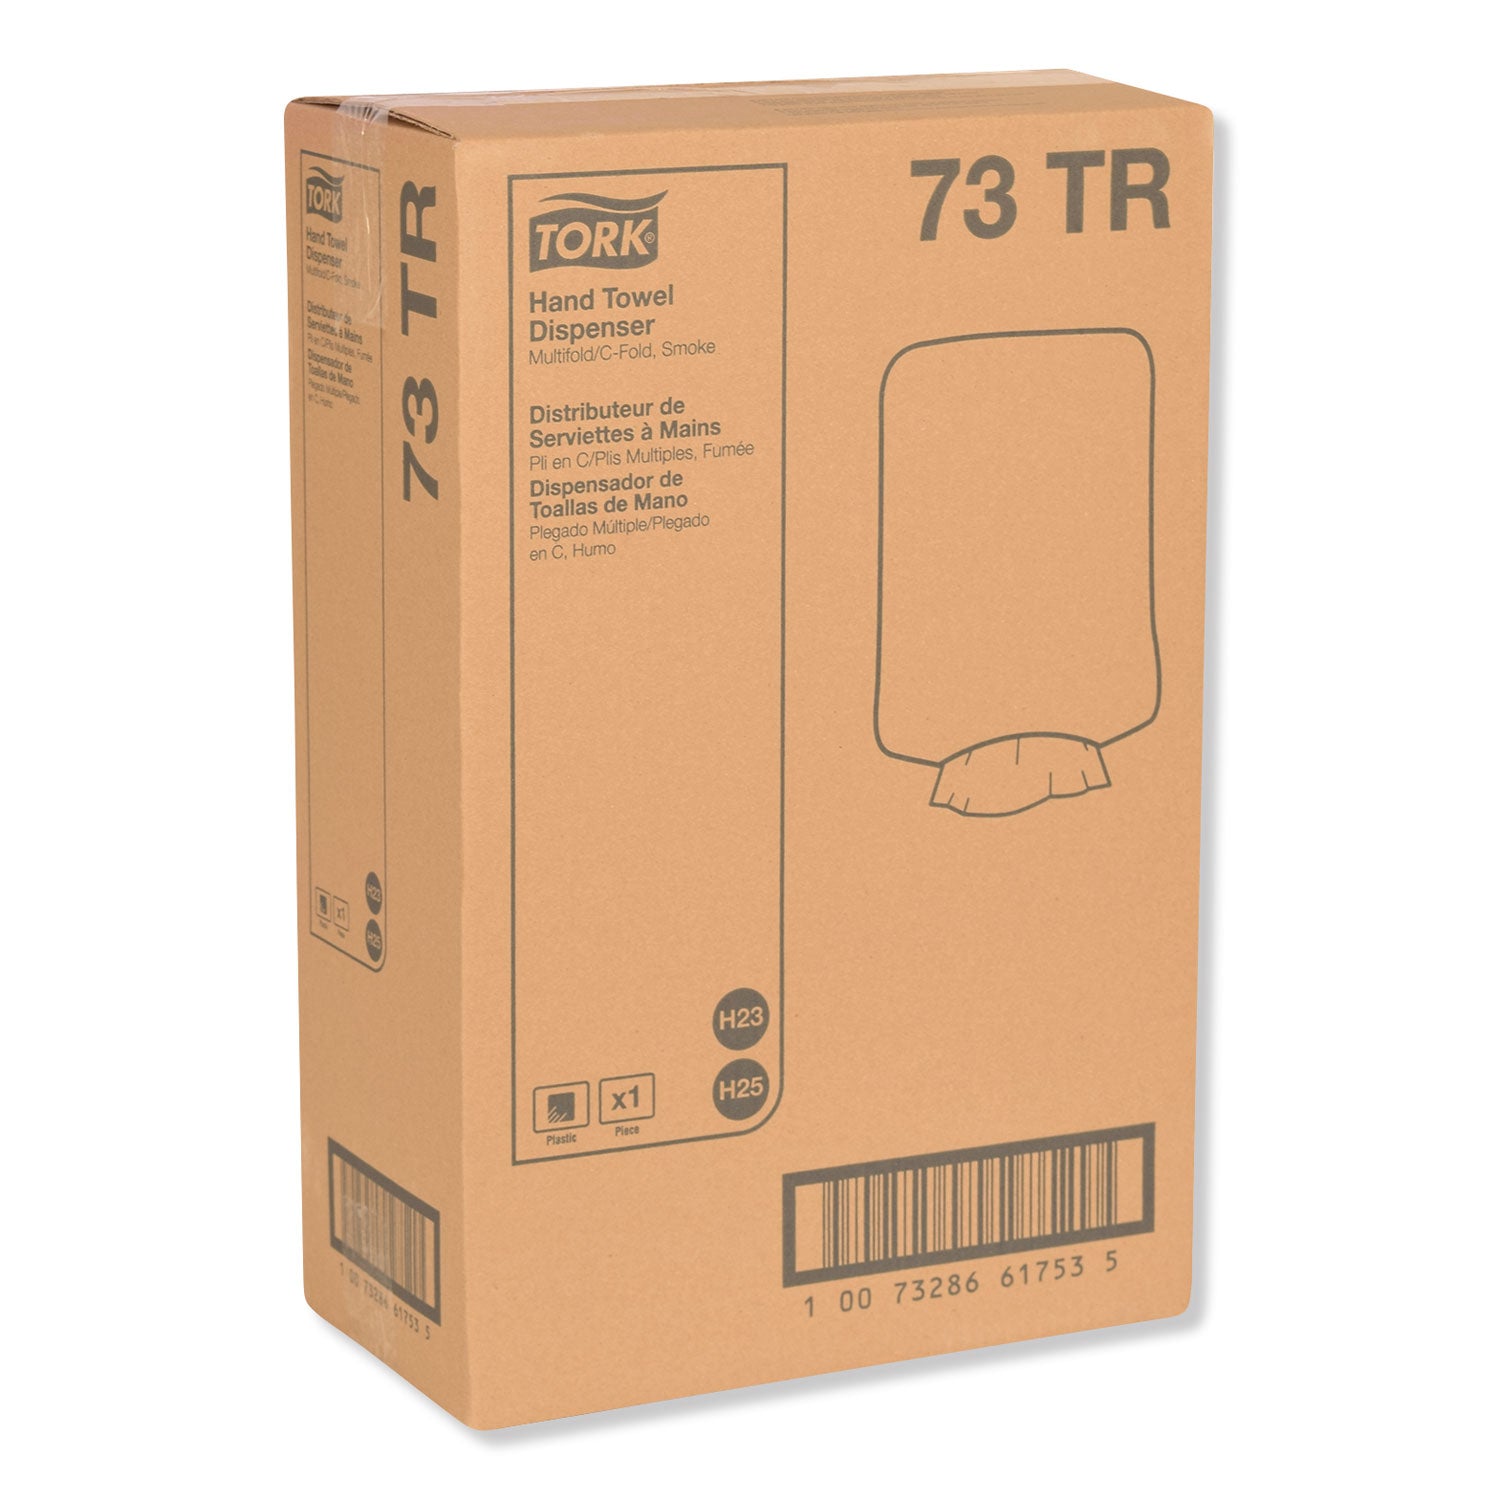 folded-towel-dispenser-1175-x-625-x-18-smoke_trk73tr - 2